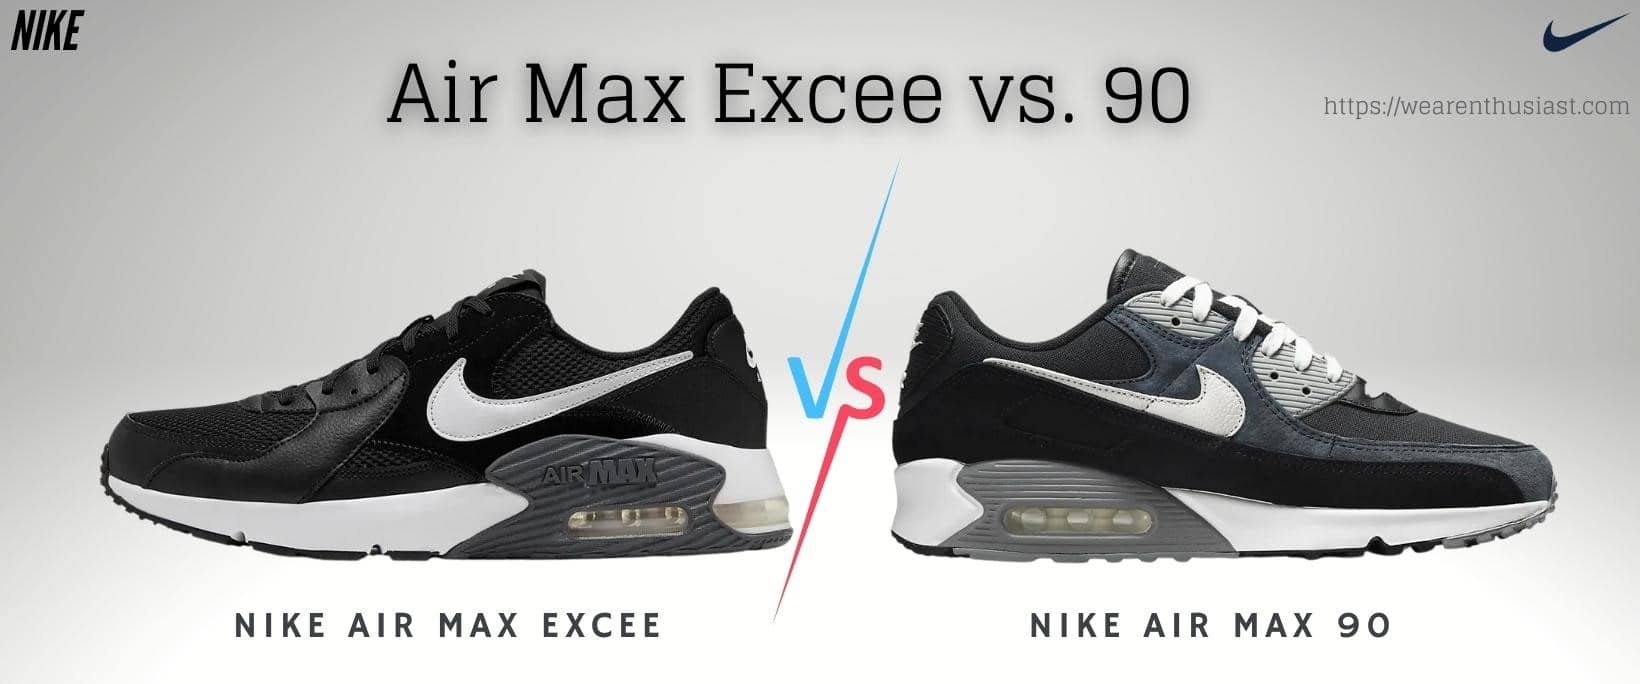 Air Max Excee vs. 90